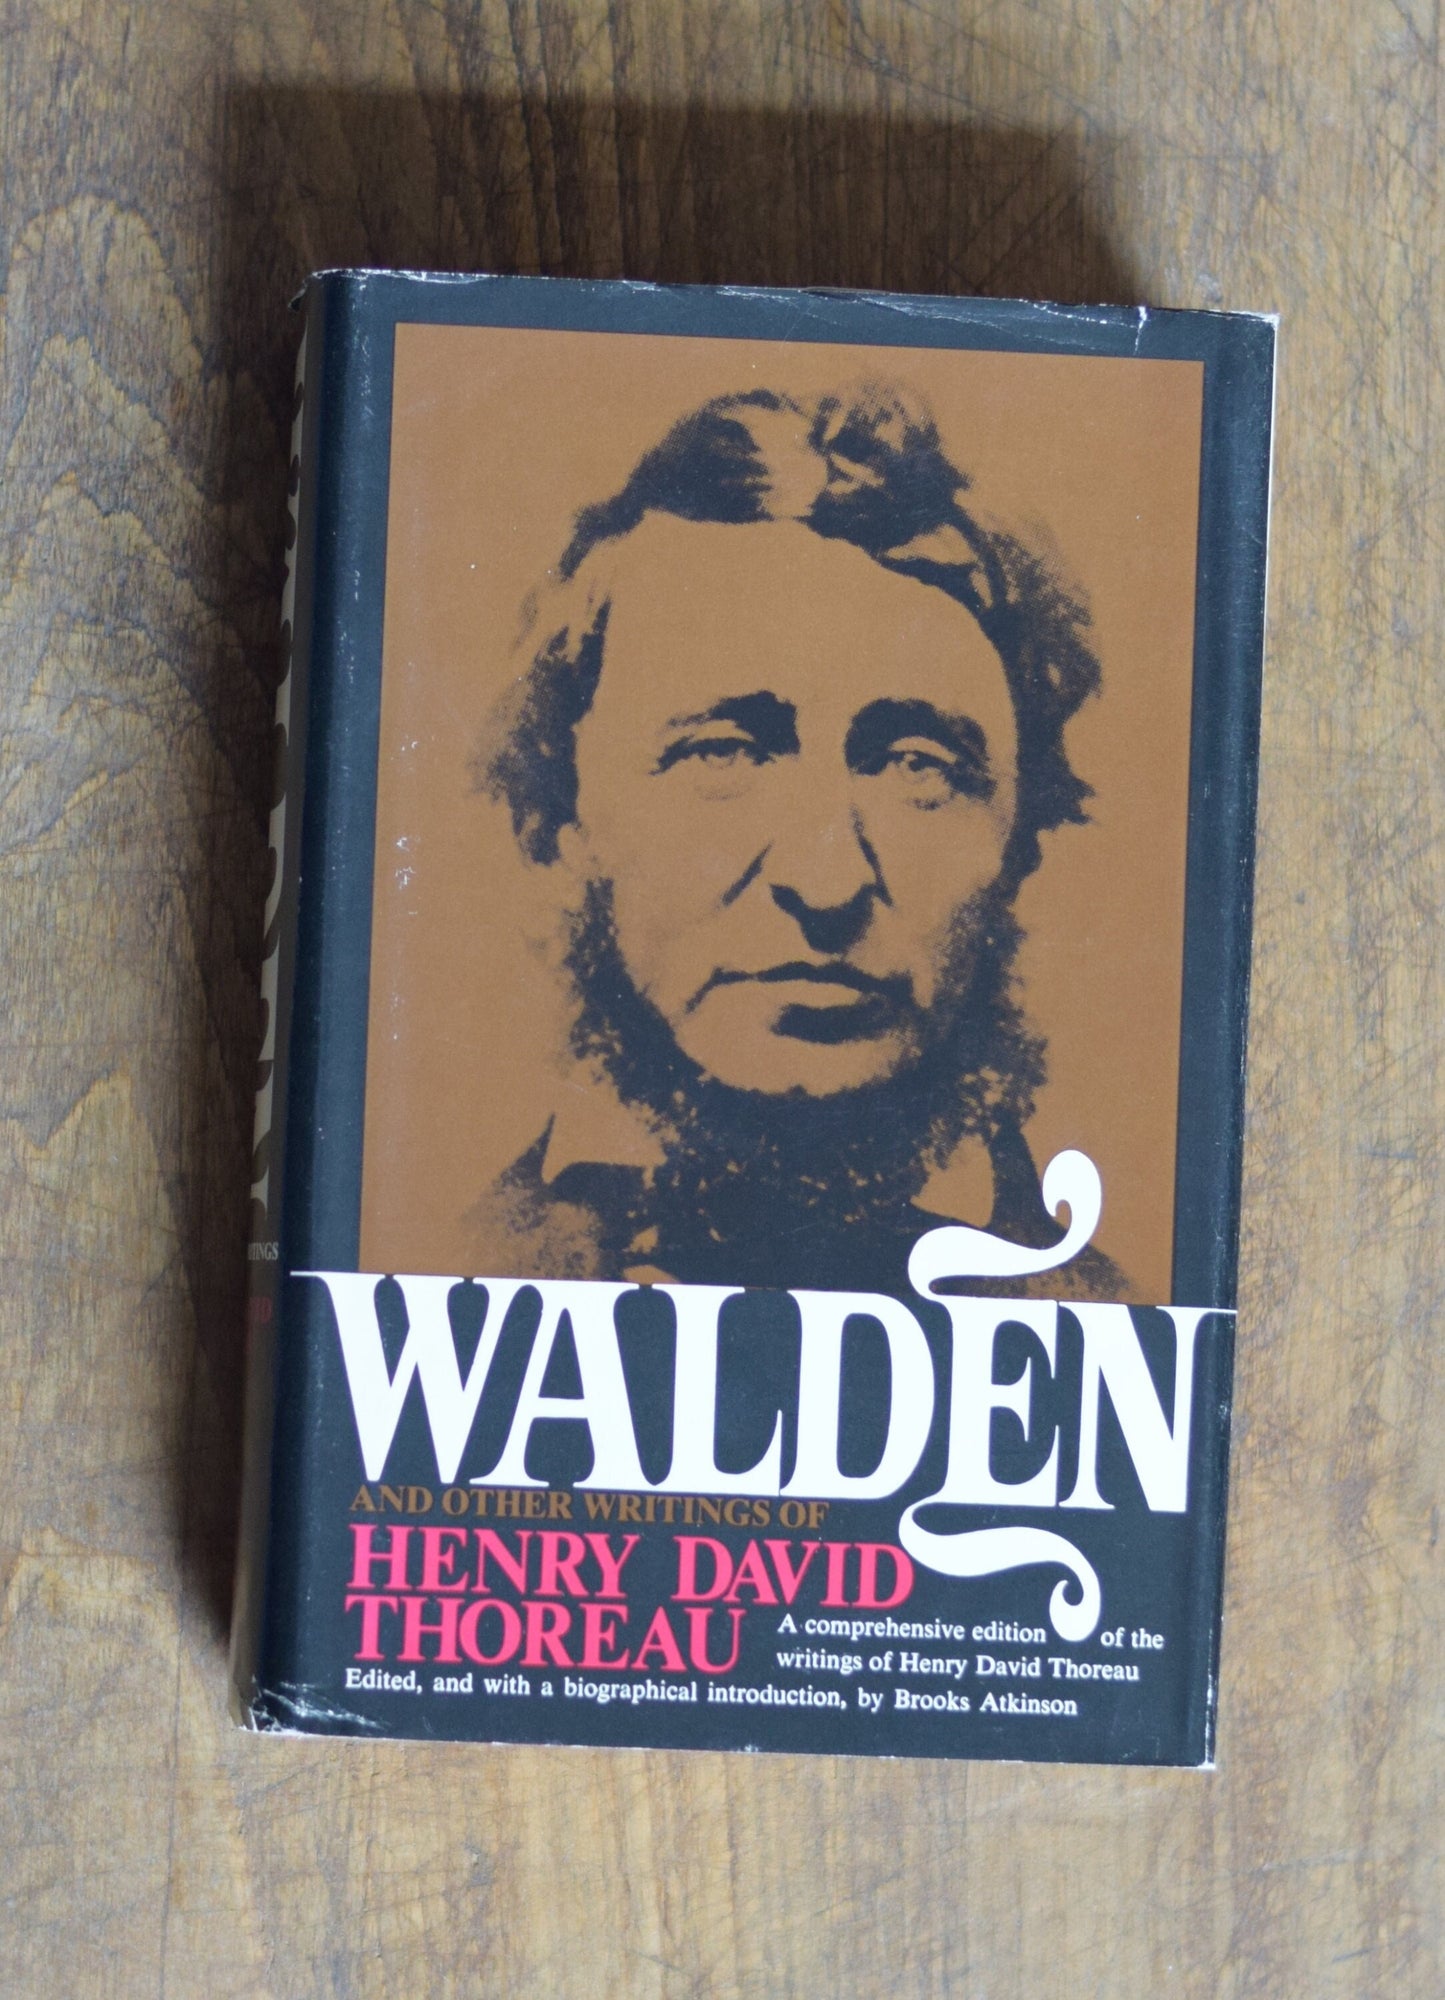 Vintage Fiction Hardback Novel: Henry David Thoreau - Walden